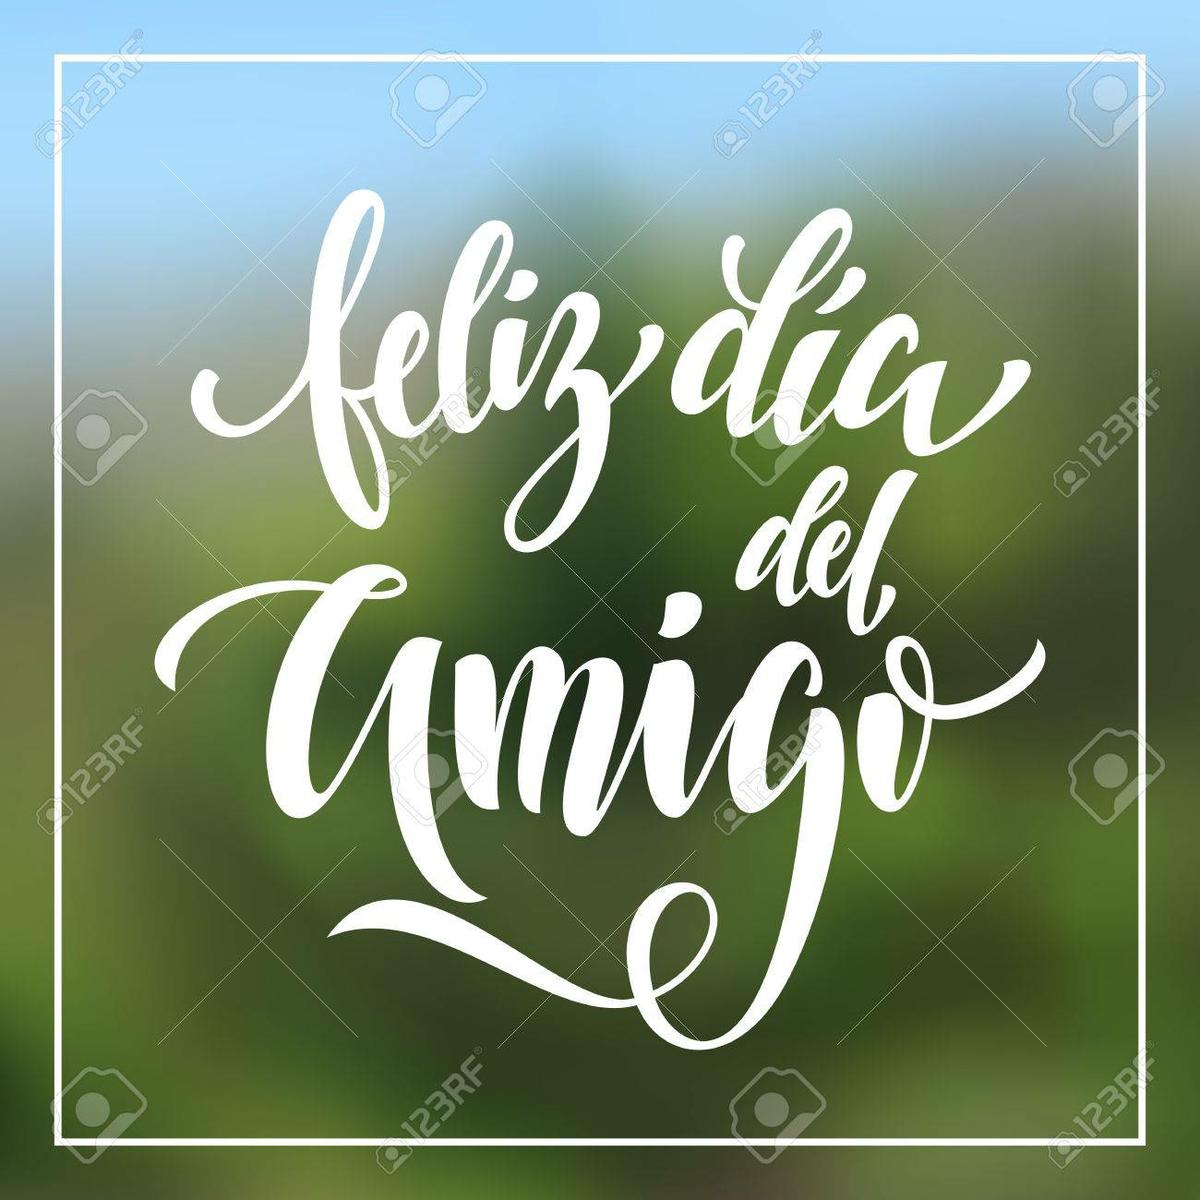 Feliz Dia del Amigo. Friendship Day greeting card in Spanish